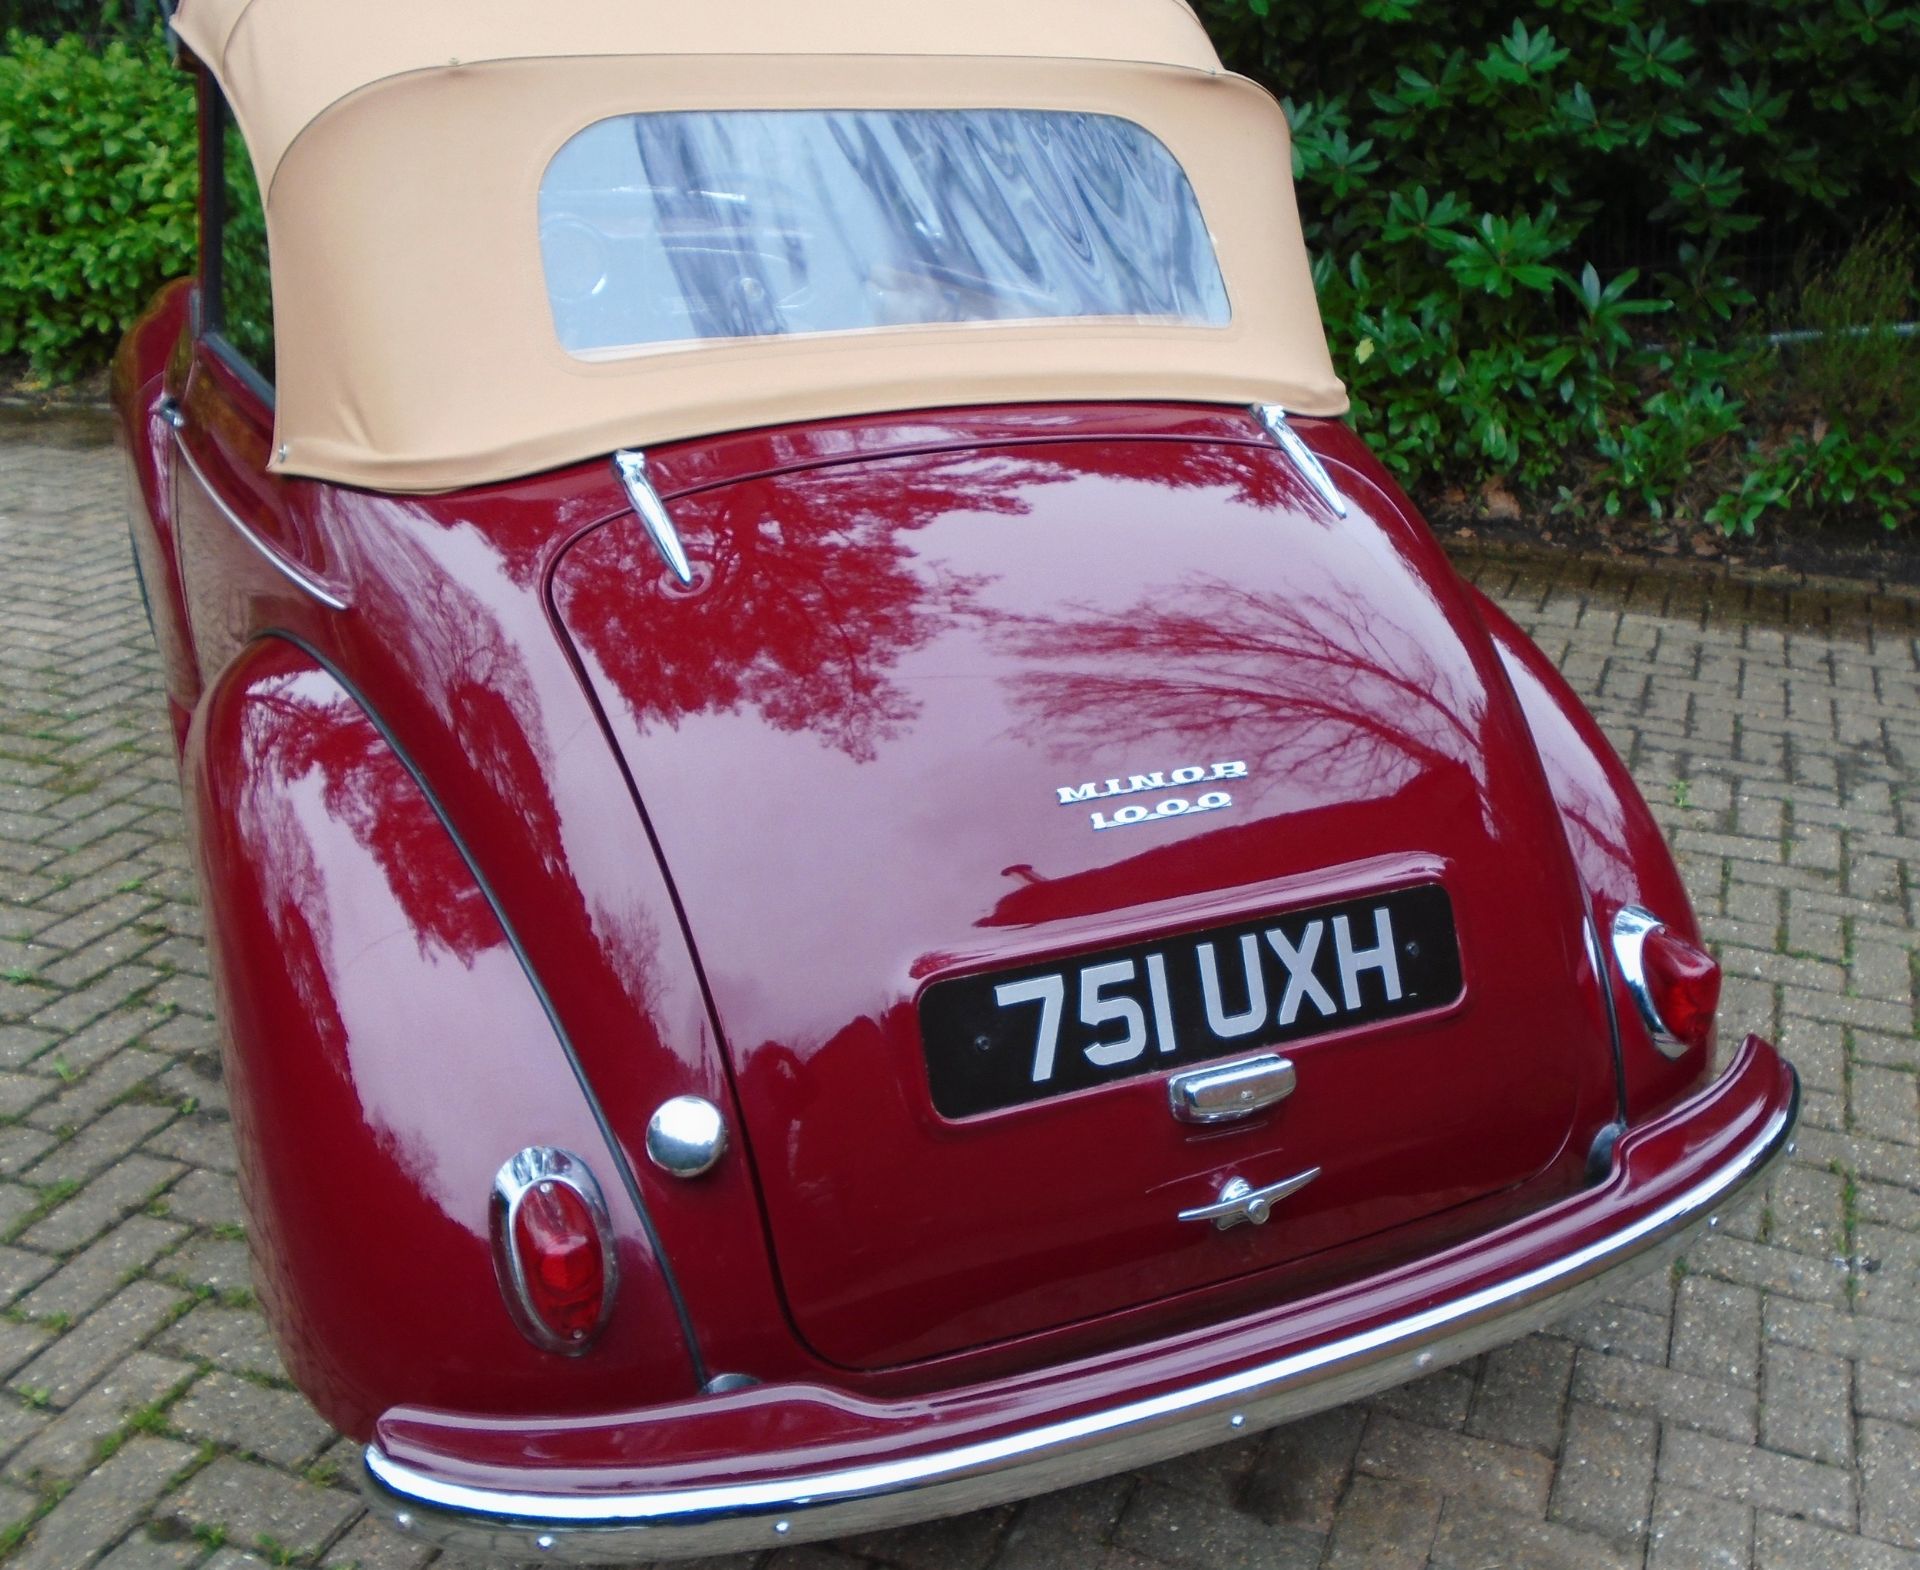 1963 MORRIS 1000 TOURER - Converted post-production Registration Number: 751 UXH Chassis Number: M/ - Image 6 of 21